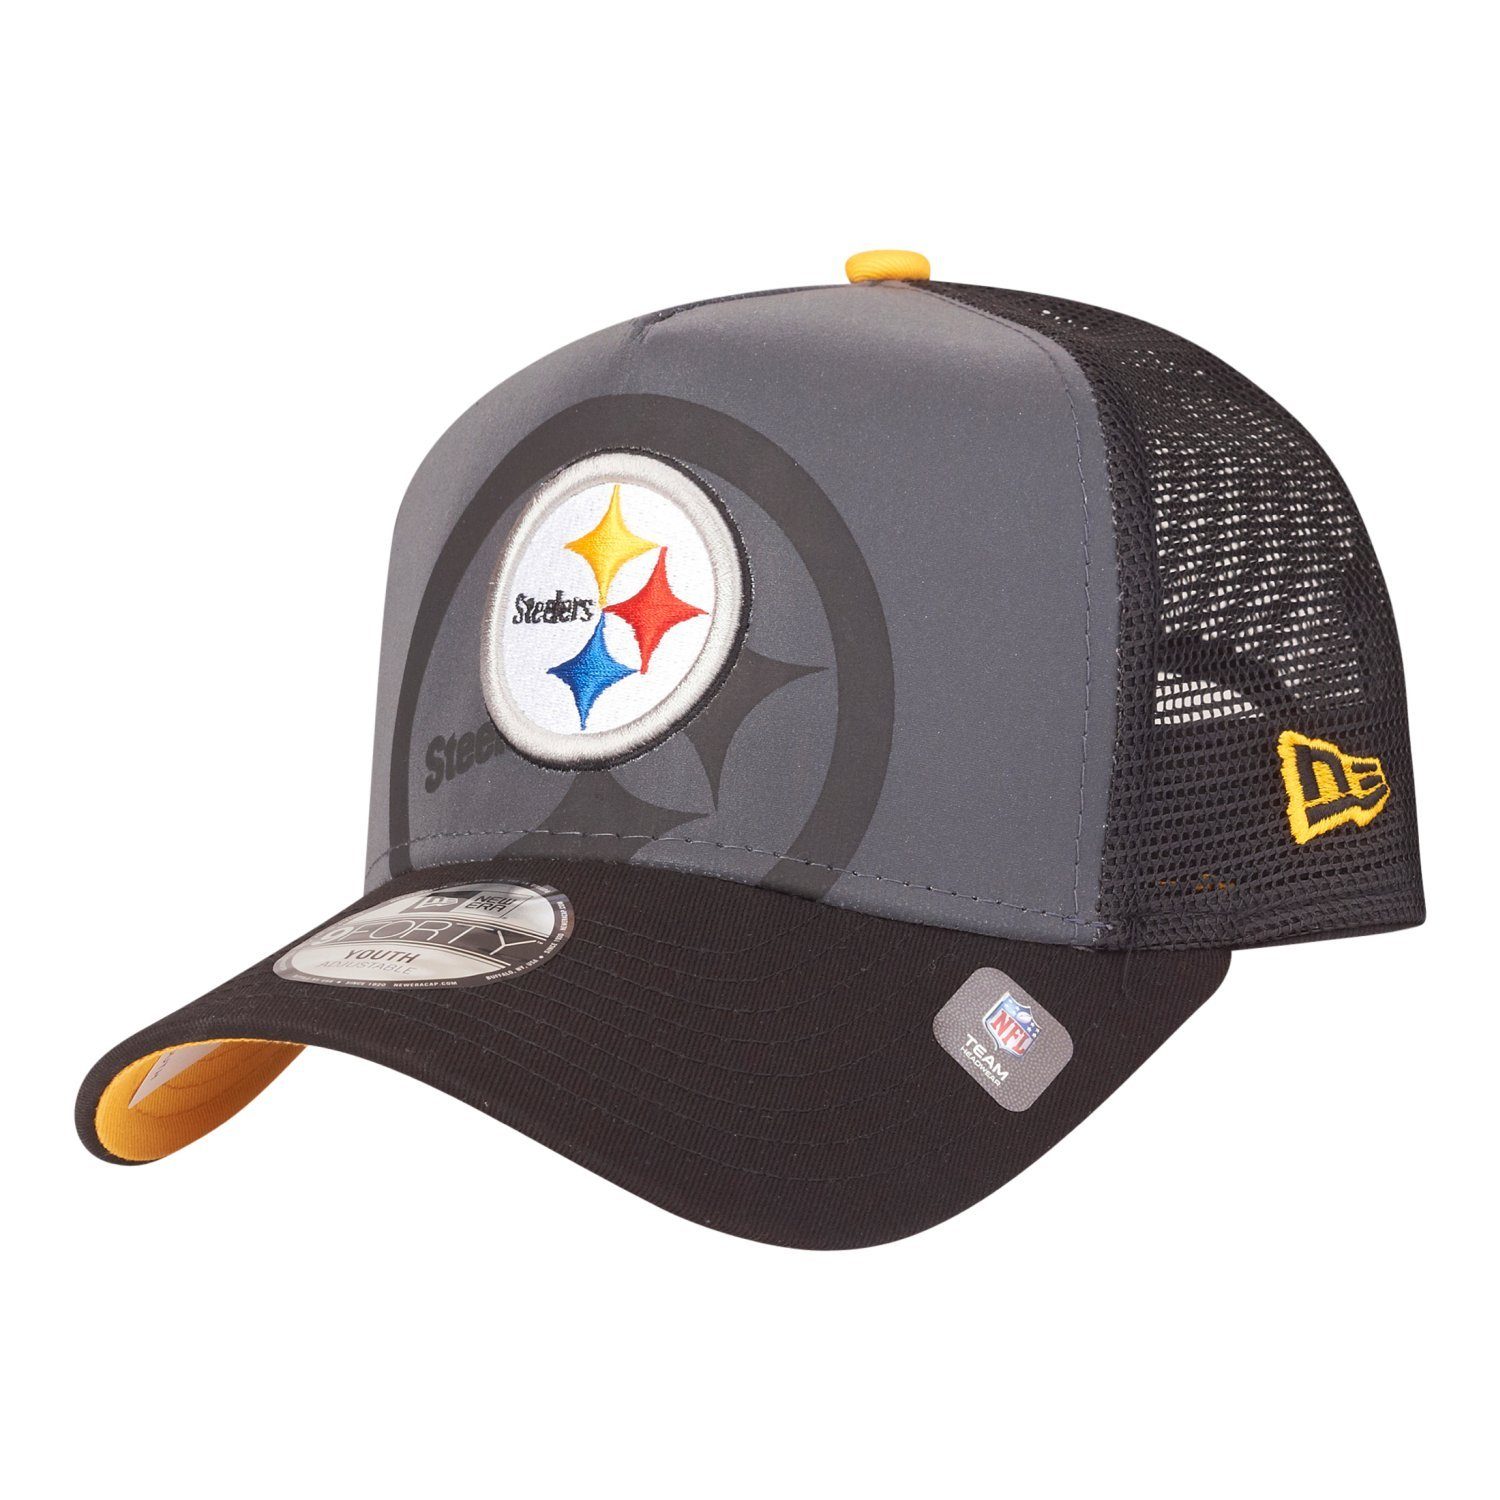 Teams Pittsburgh New NFL Era Steelers Baseball Cap Trucker AFrame